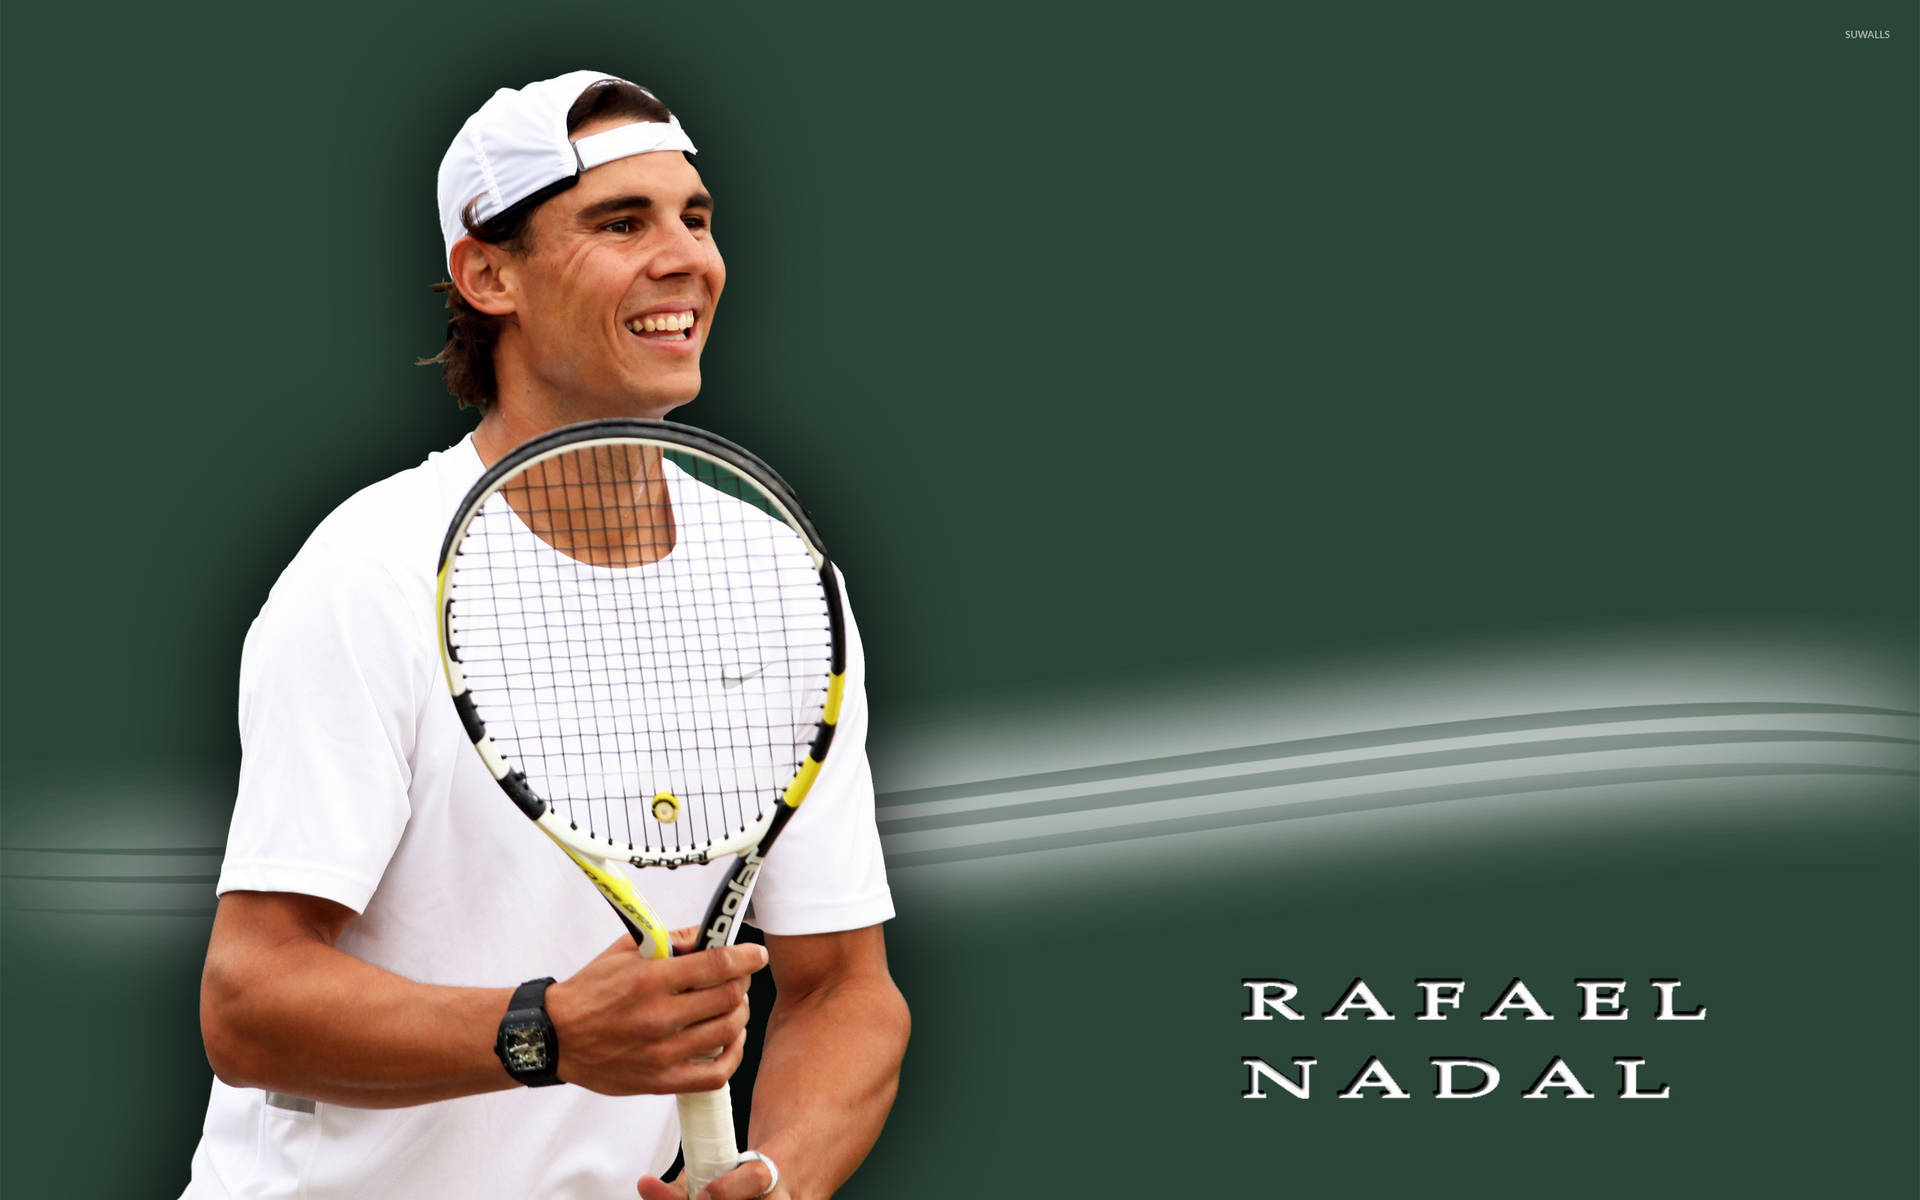 Rafael Nadal Popular Spanish Player Wallpaper